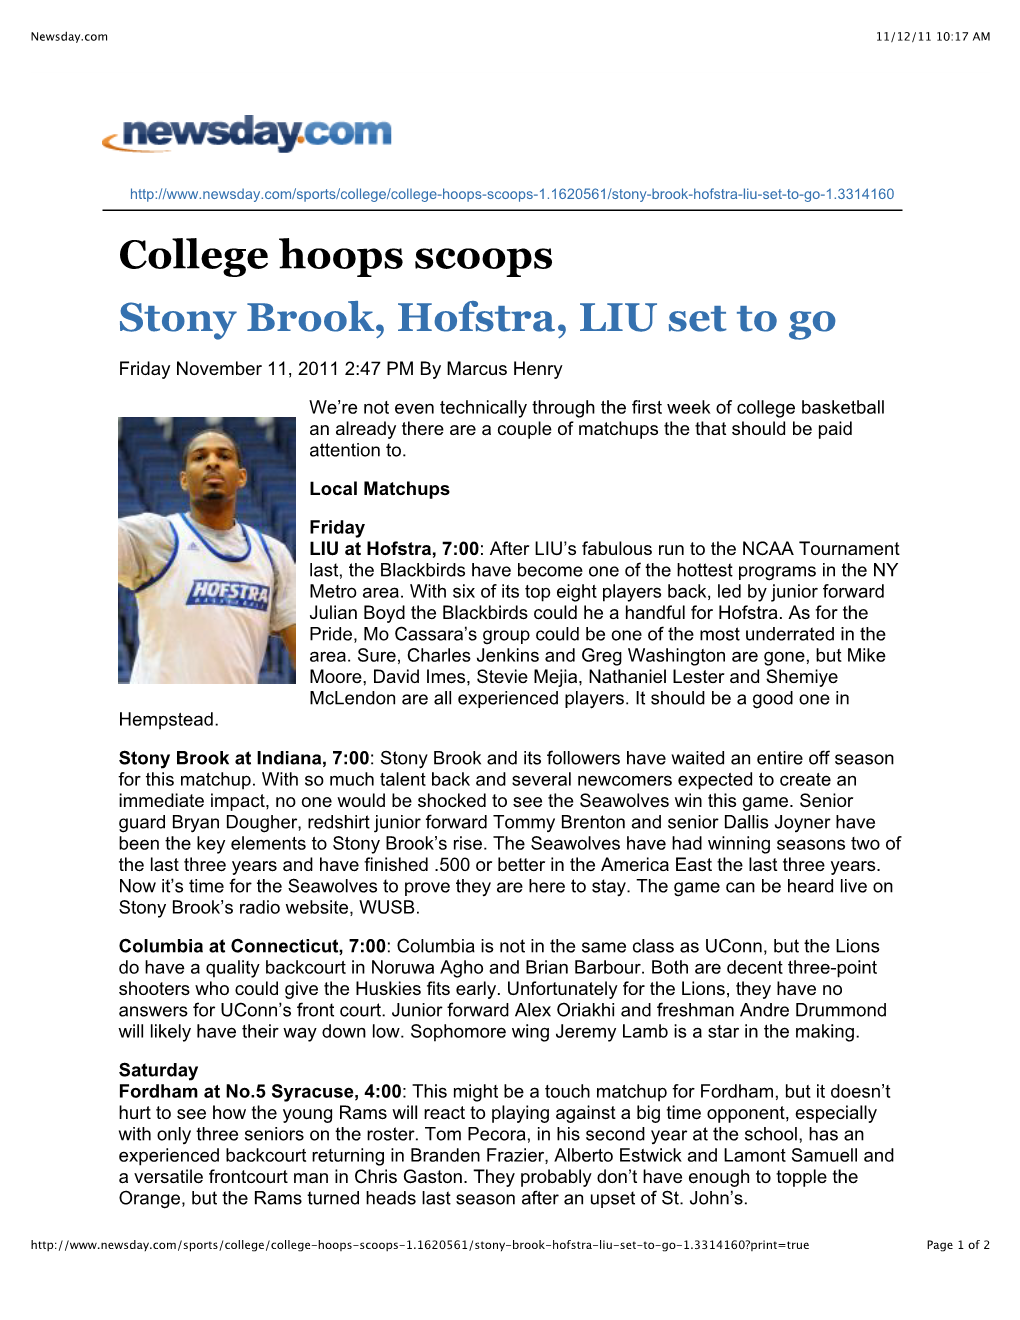 College Hoops Scoops Stony Brook, Hofstra, LIU Set to Go